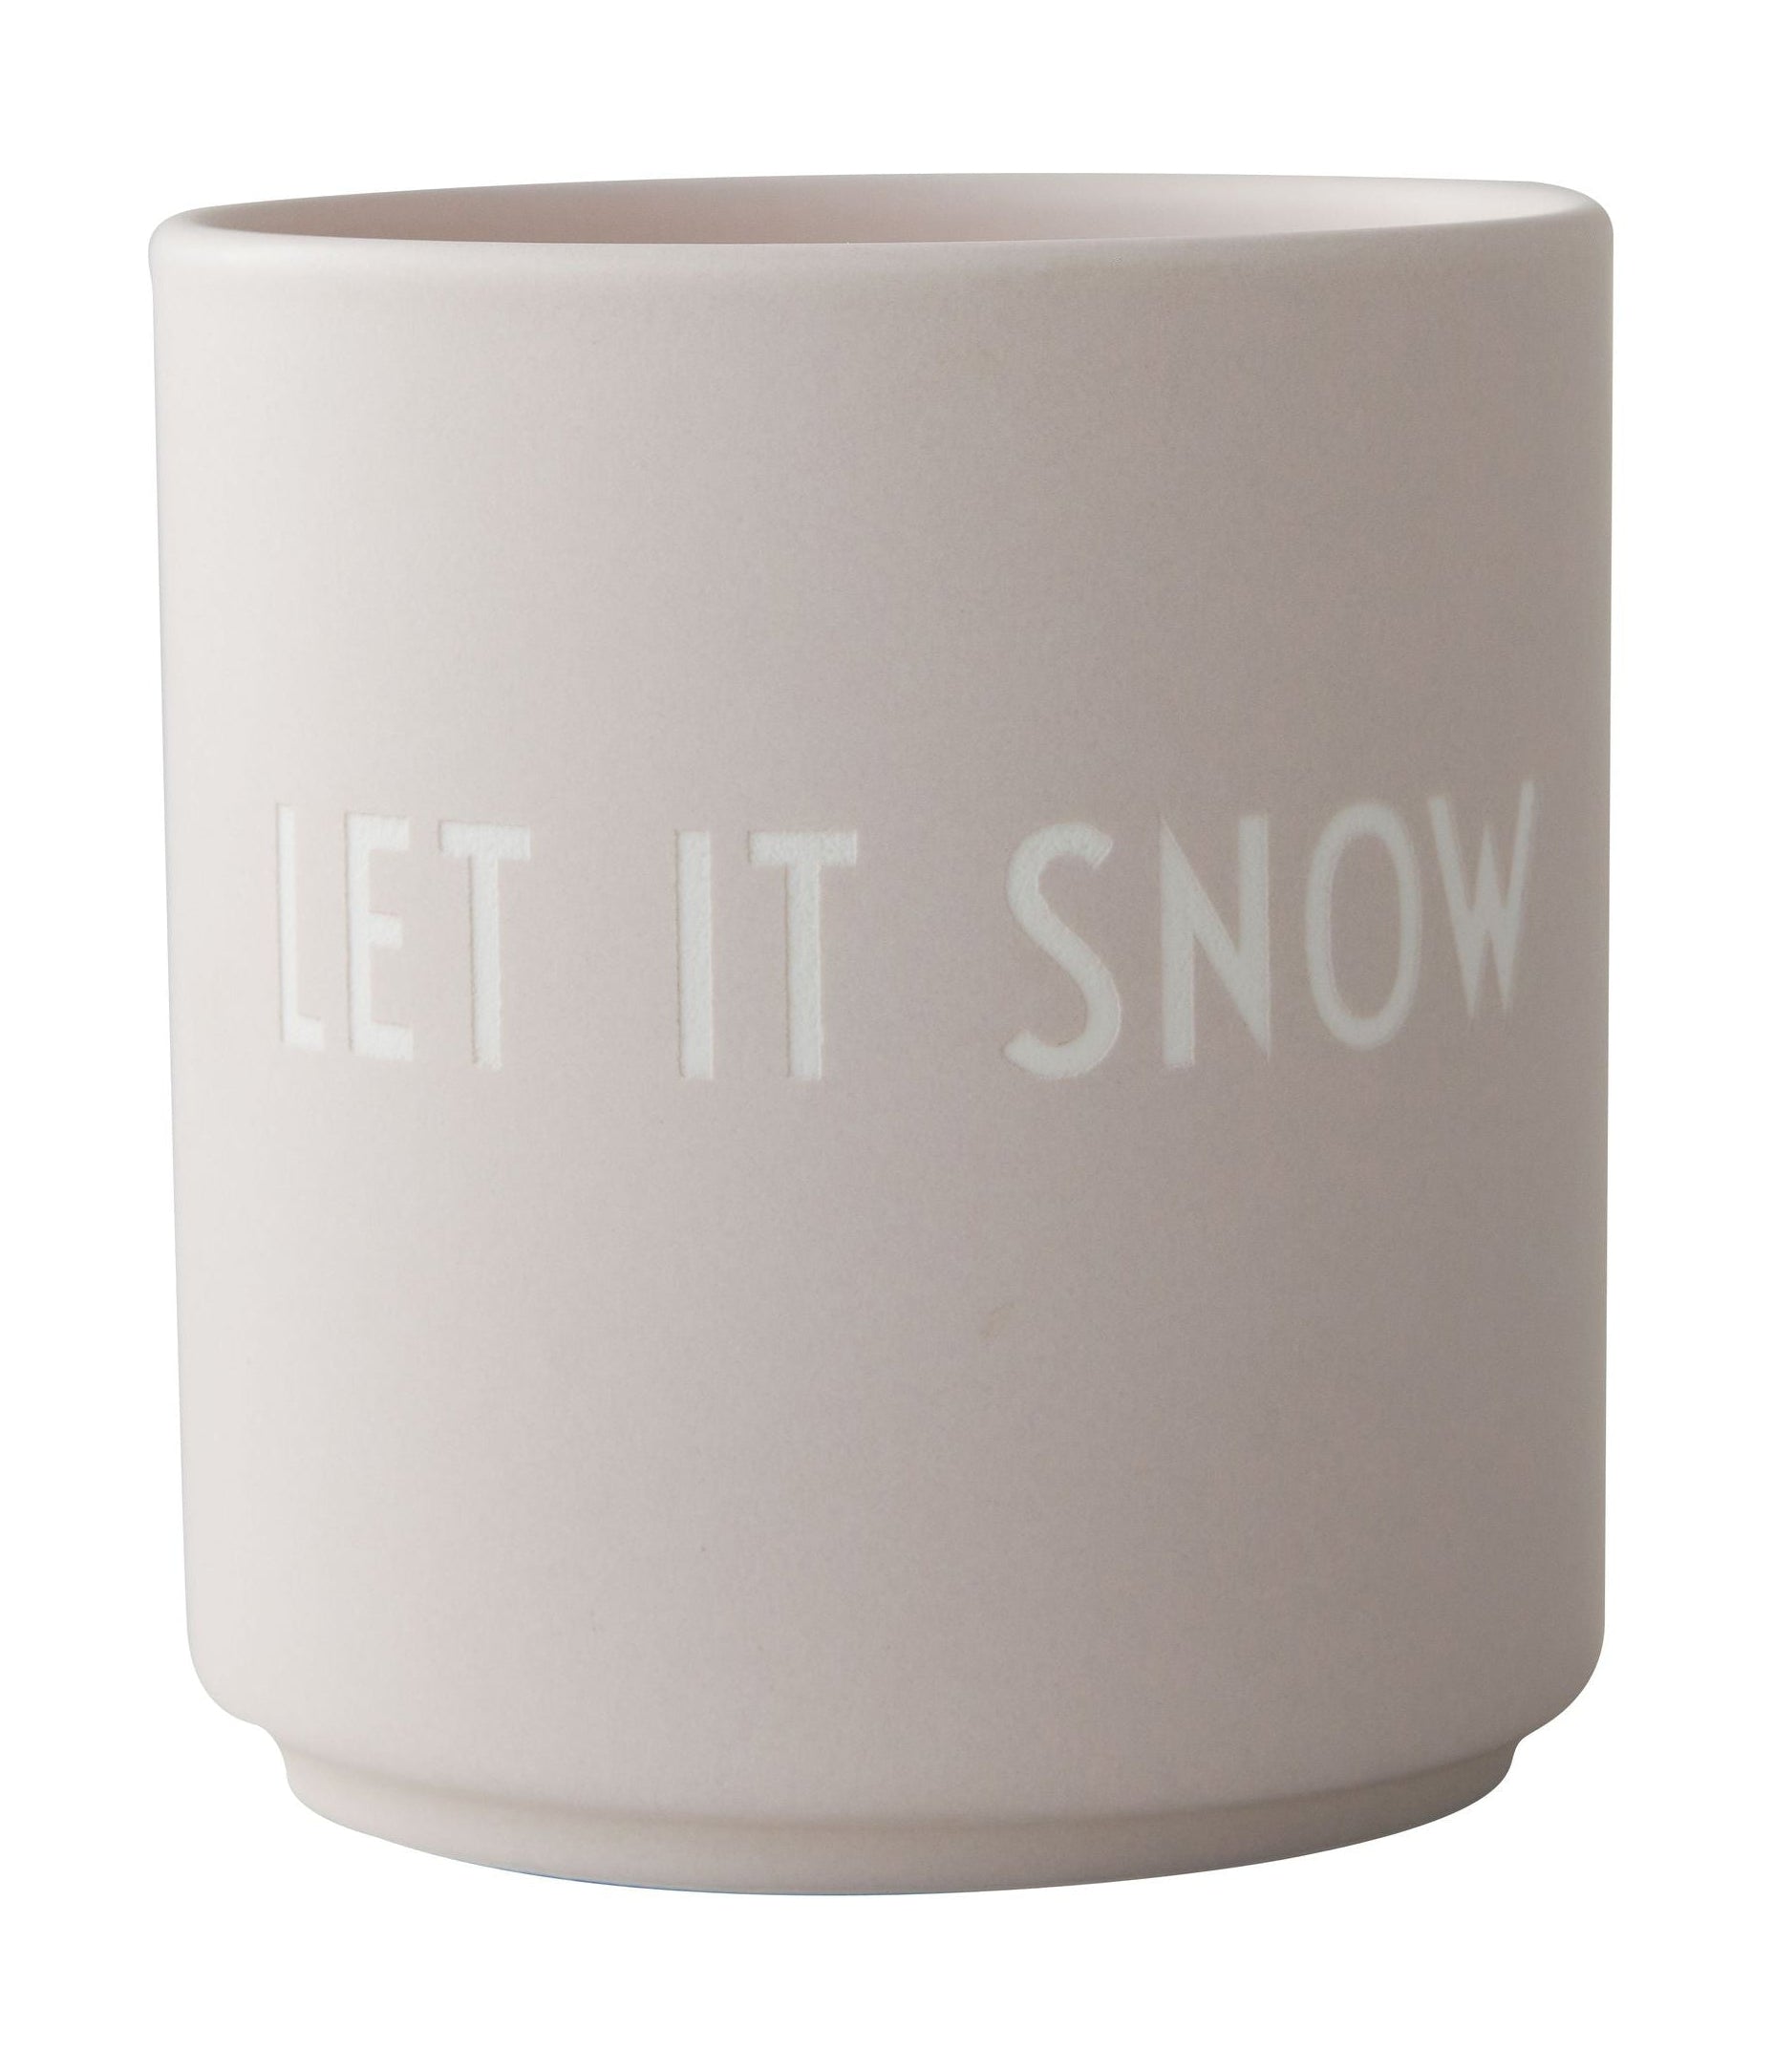 Design Letter's Favorite Becher Let It Snow, Pastell Beige